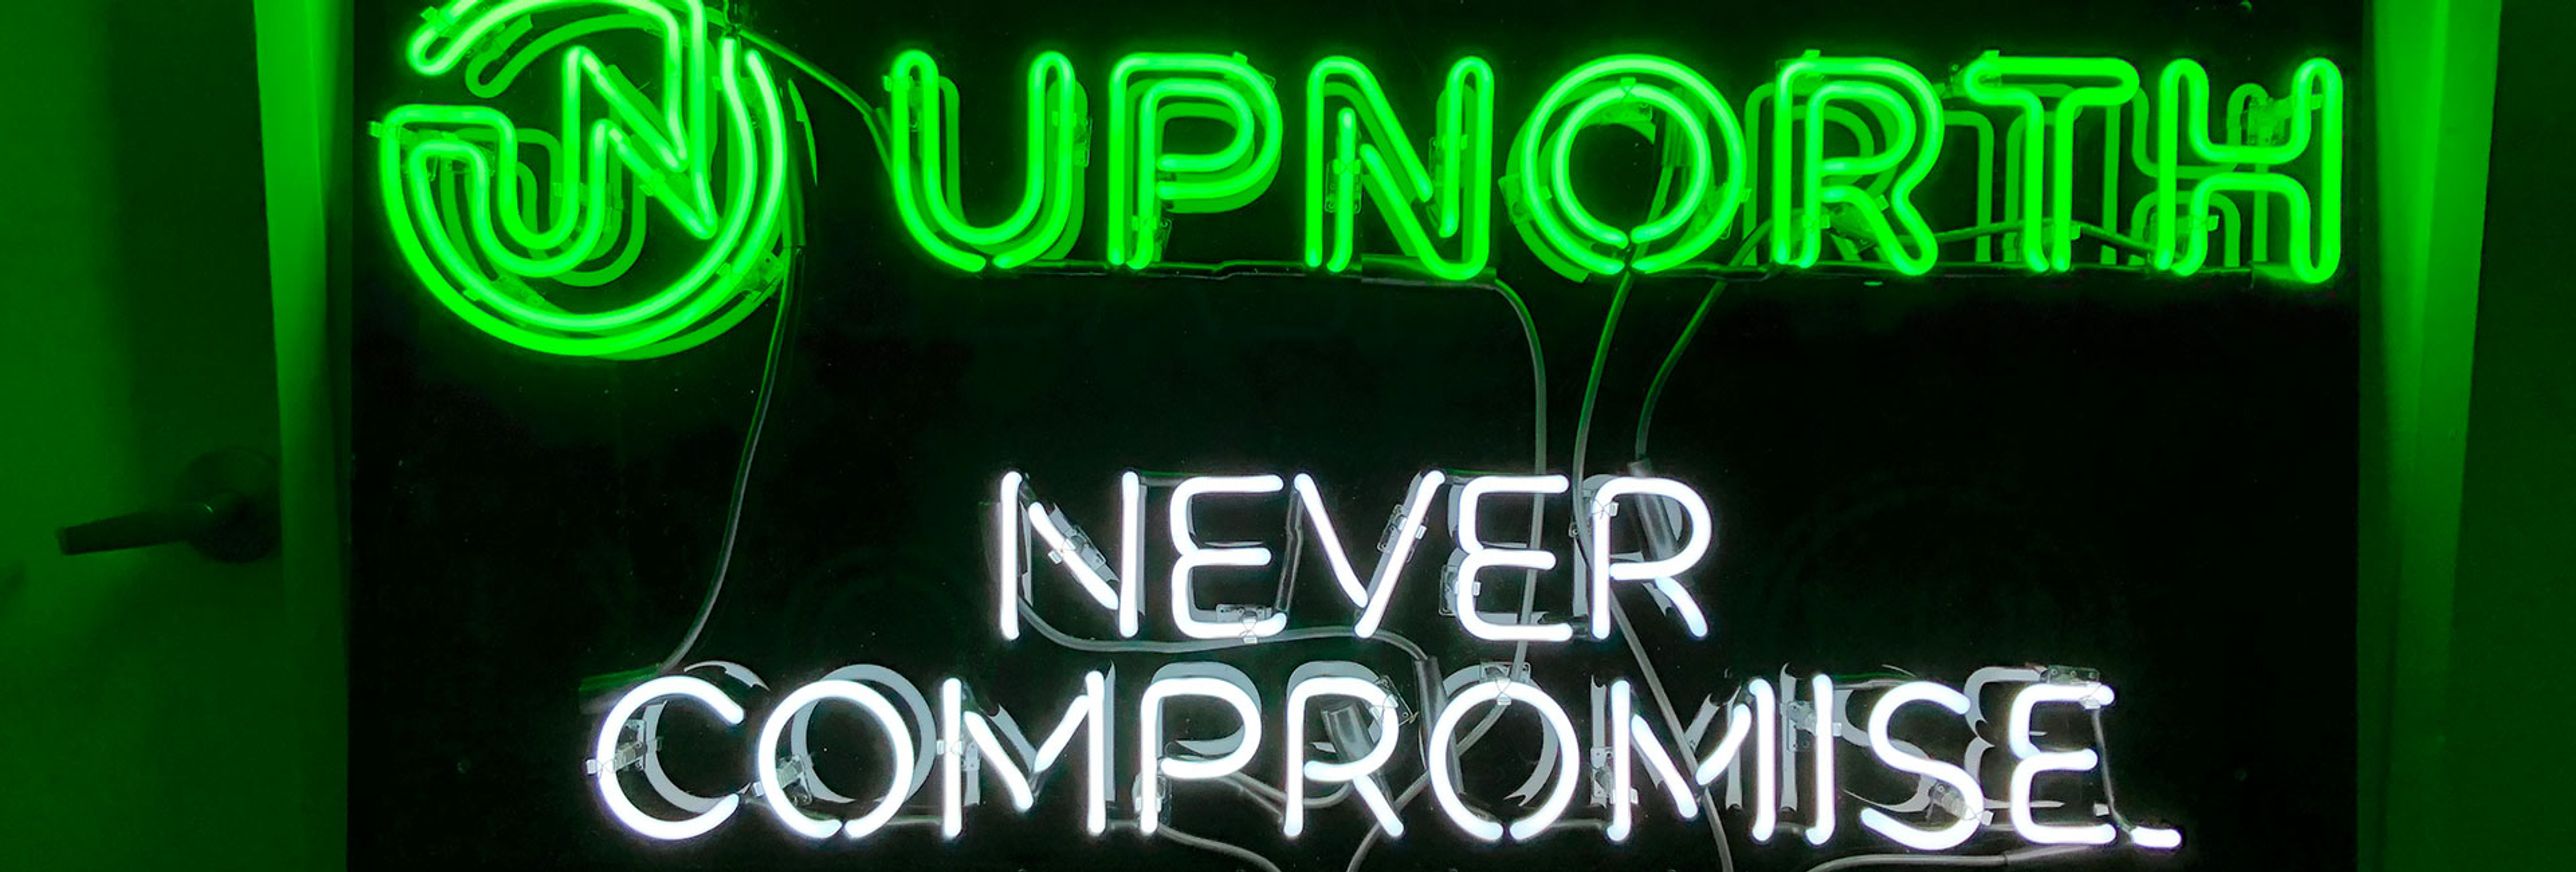 UpNorth Distribution Custom Made Neon Sign